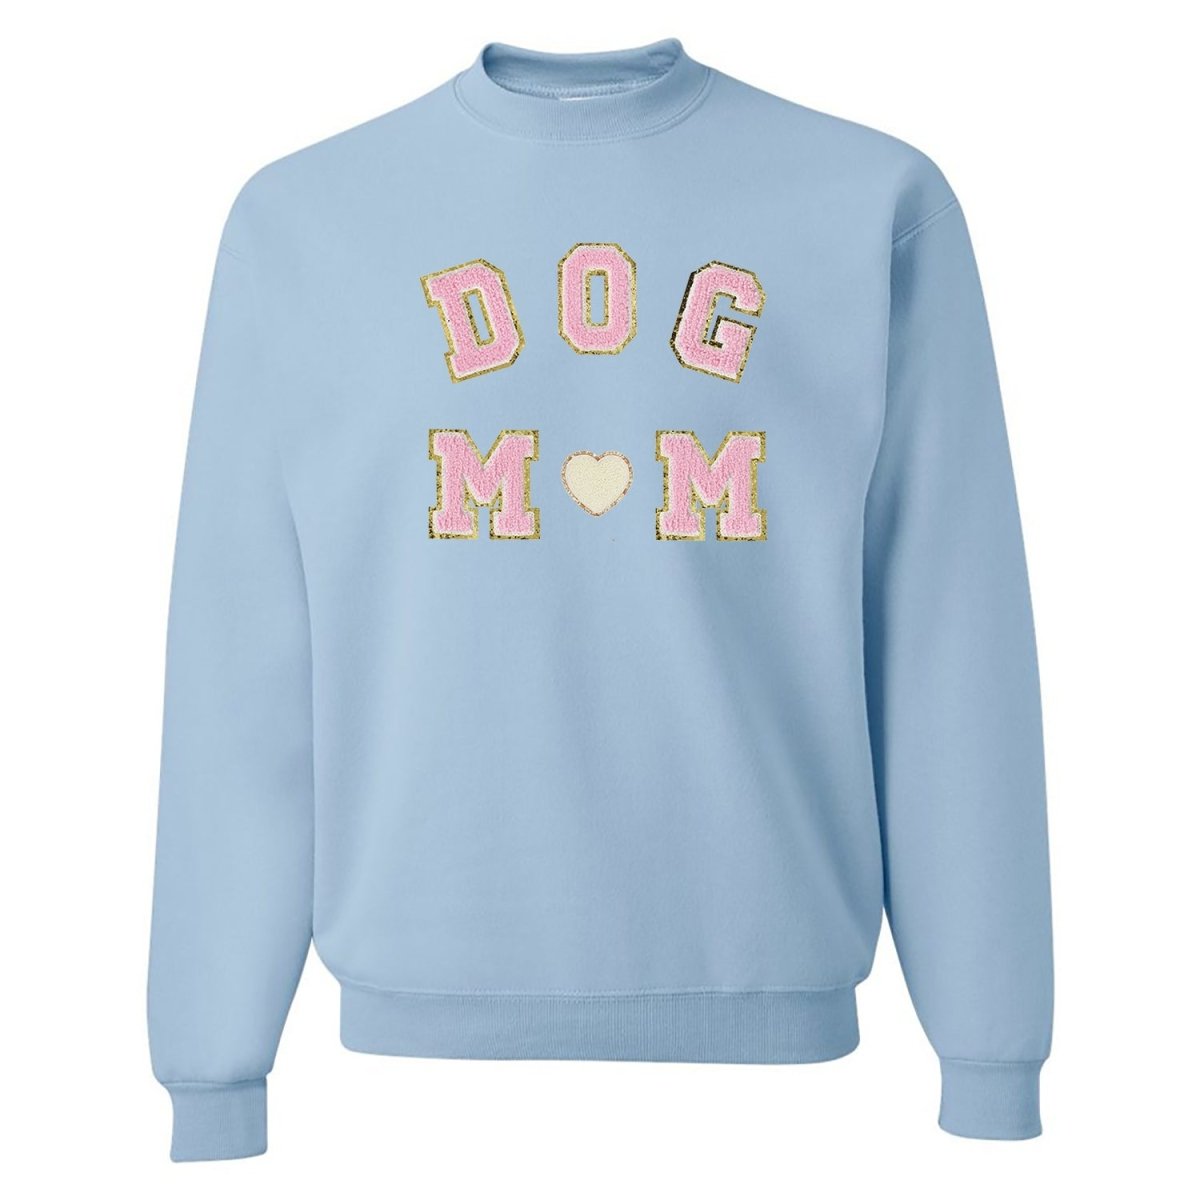 Dog Mom Letter Patch Crewneck Sweatshirt - United Monograms